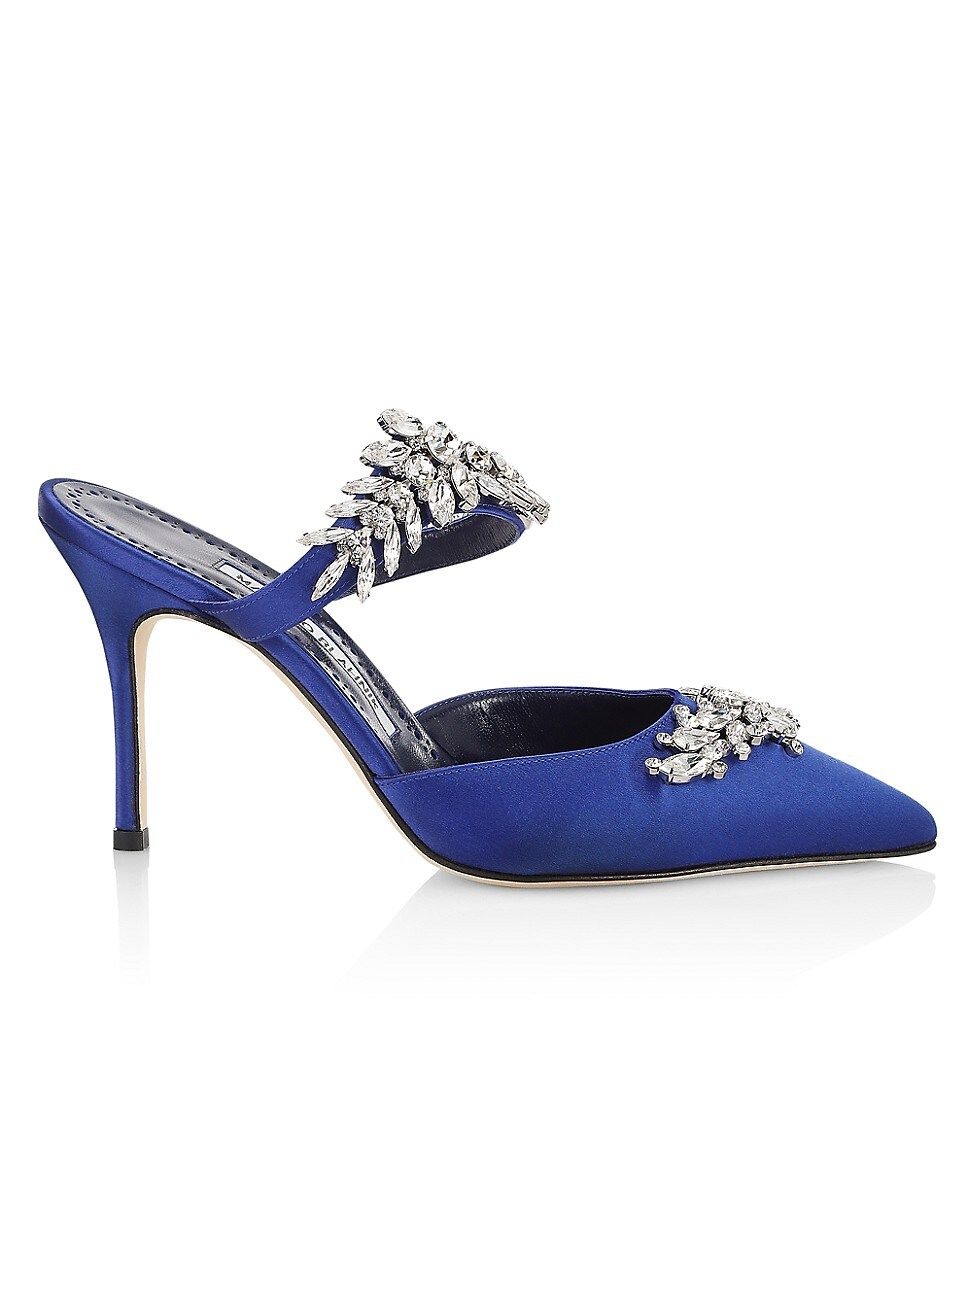 Manolo Blahnik Women's Lurum Embellished Satin Mules - Blue - Size 10.5 | Saks Fifth Avenue